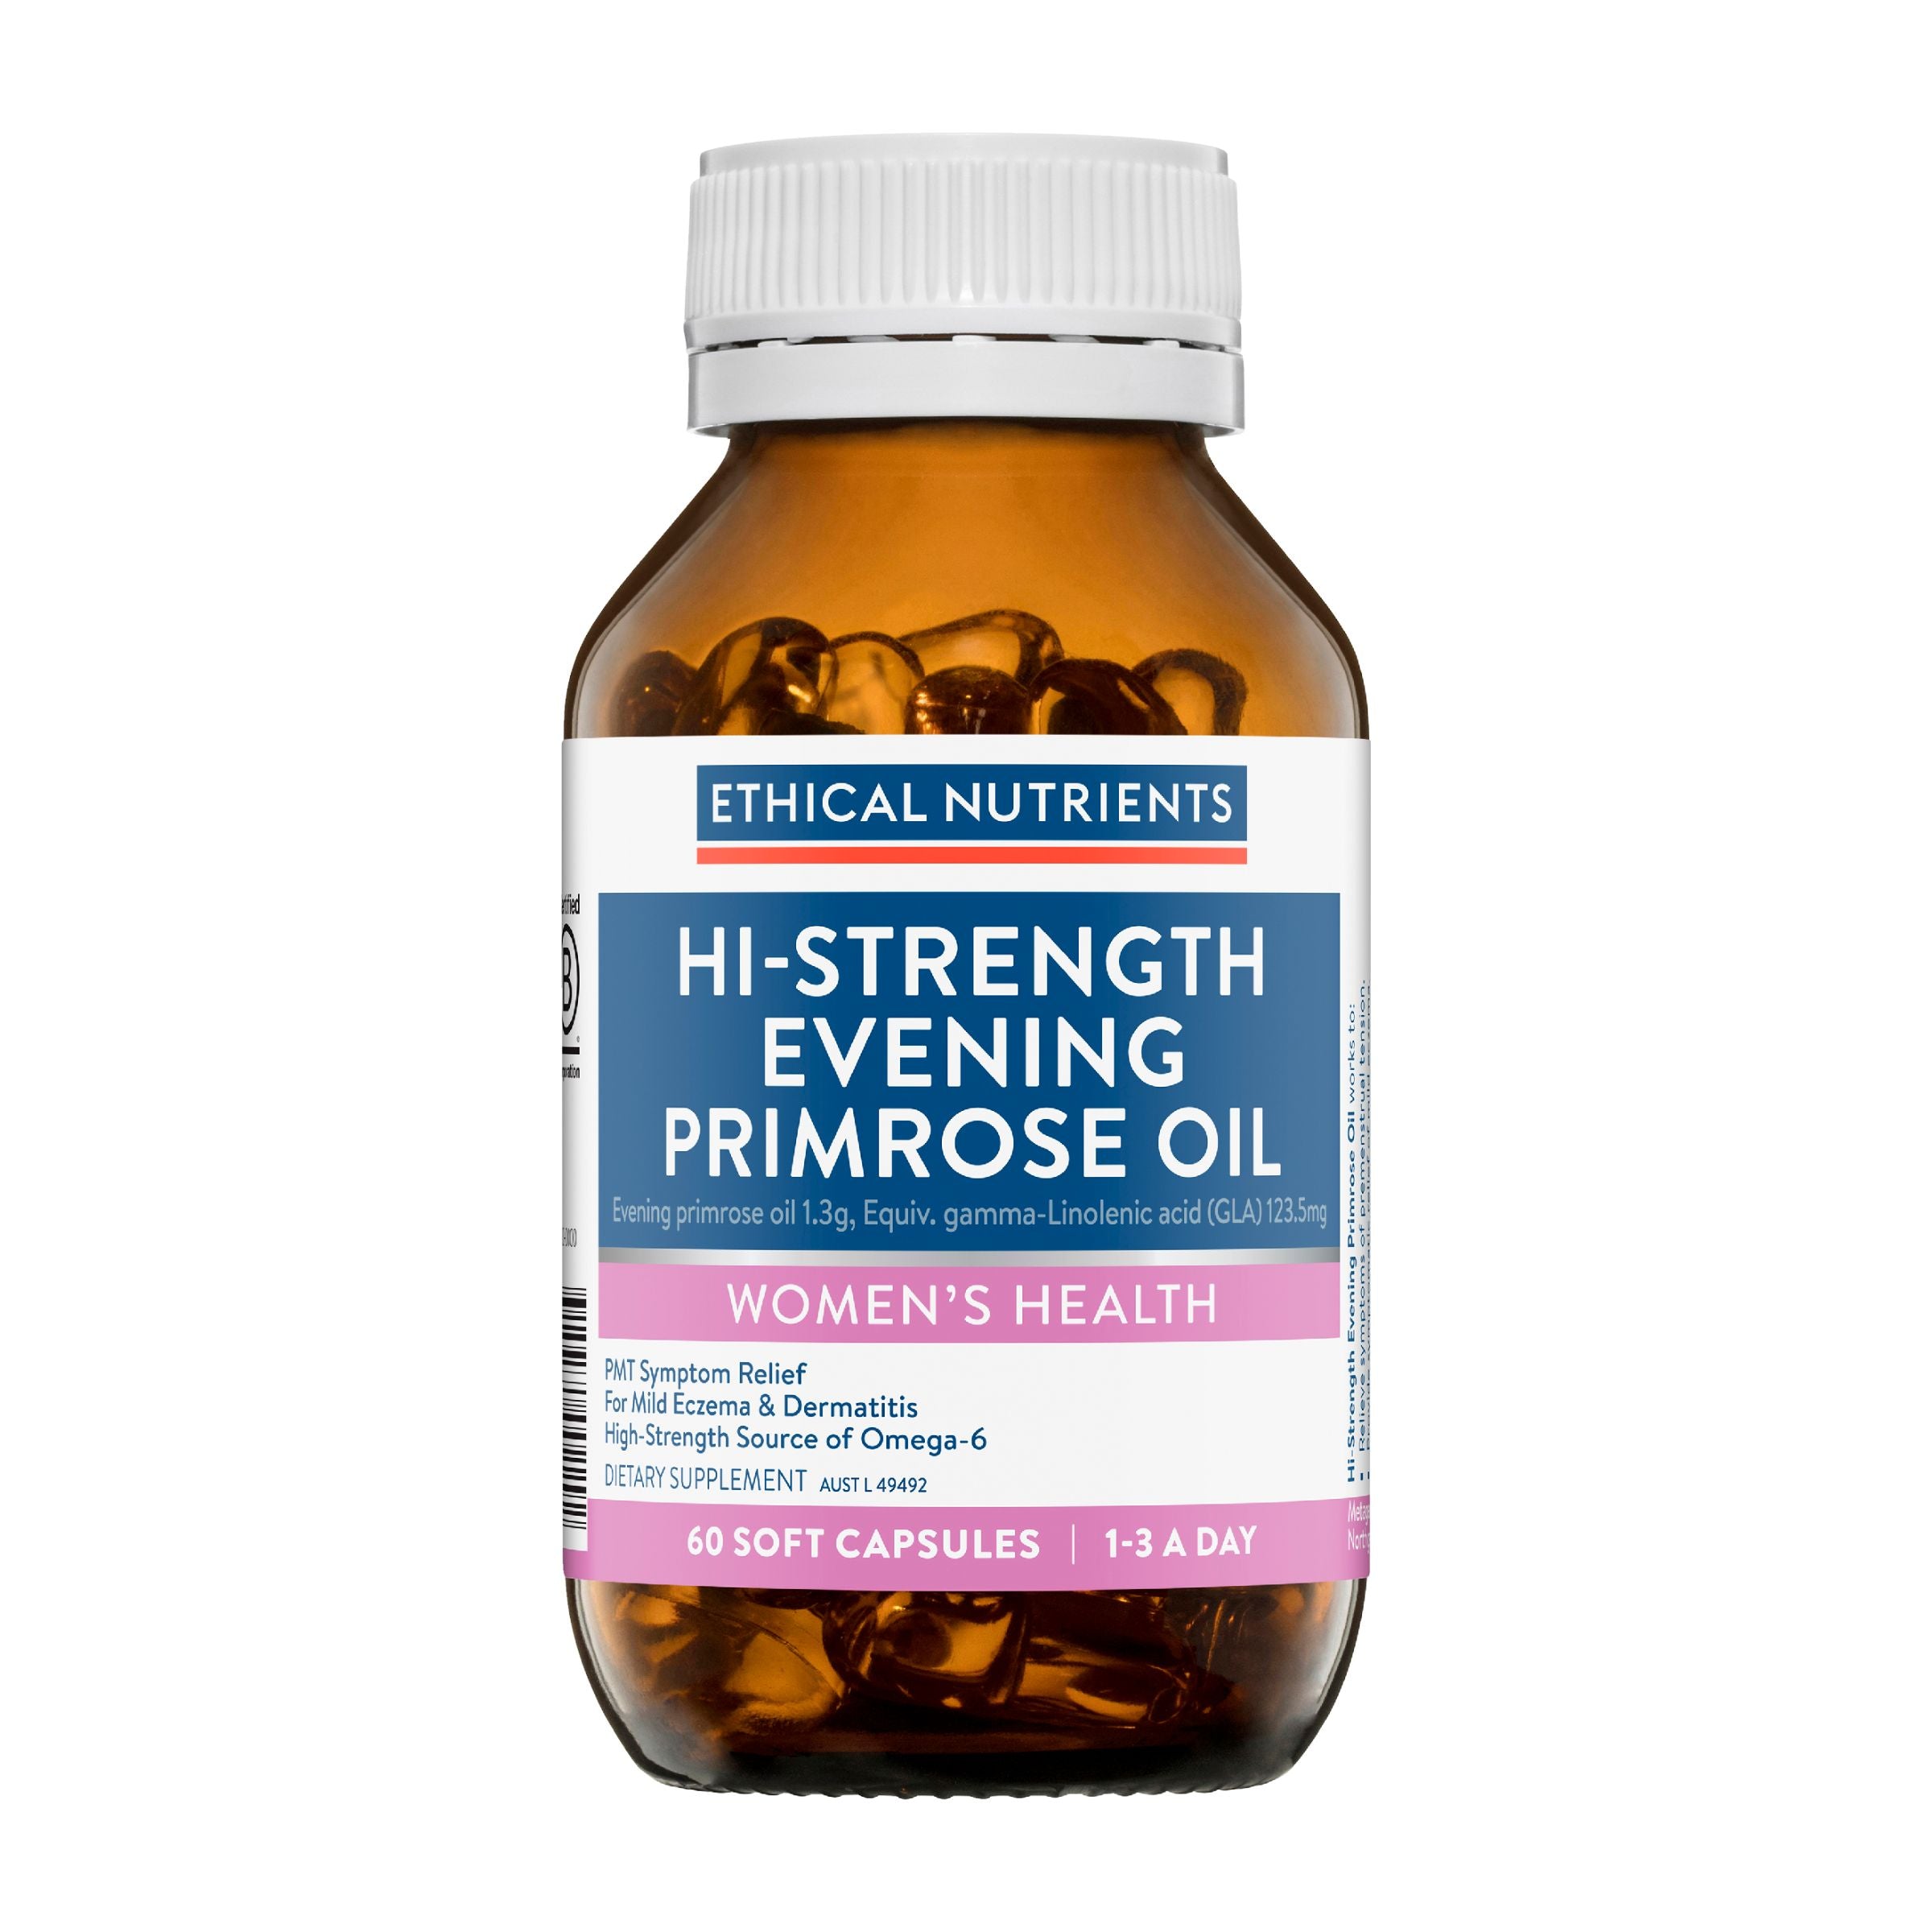 Ethical Nutrients Hi-Strength Evening Primrose Oil 60 Capsules #size_60 soft capsules